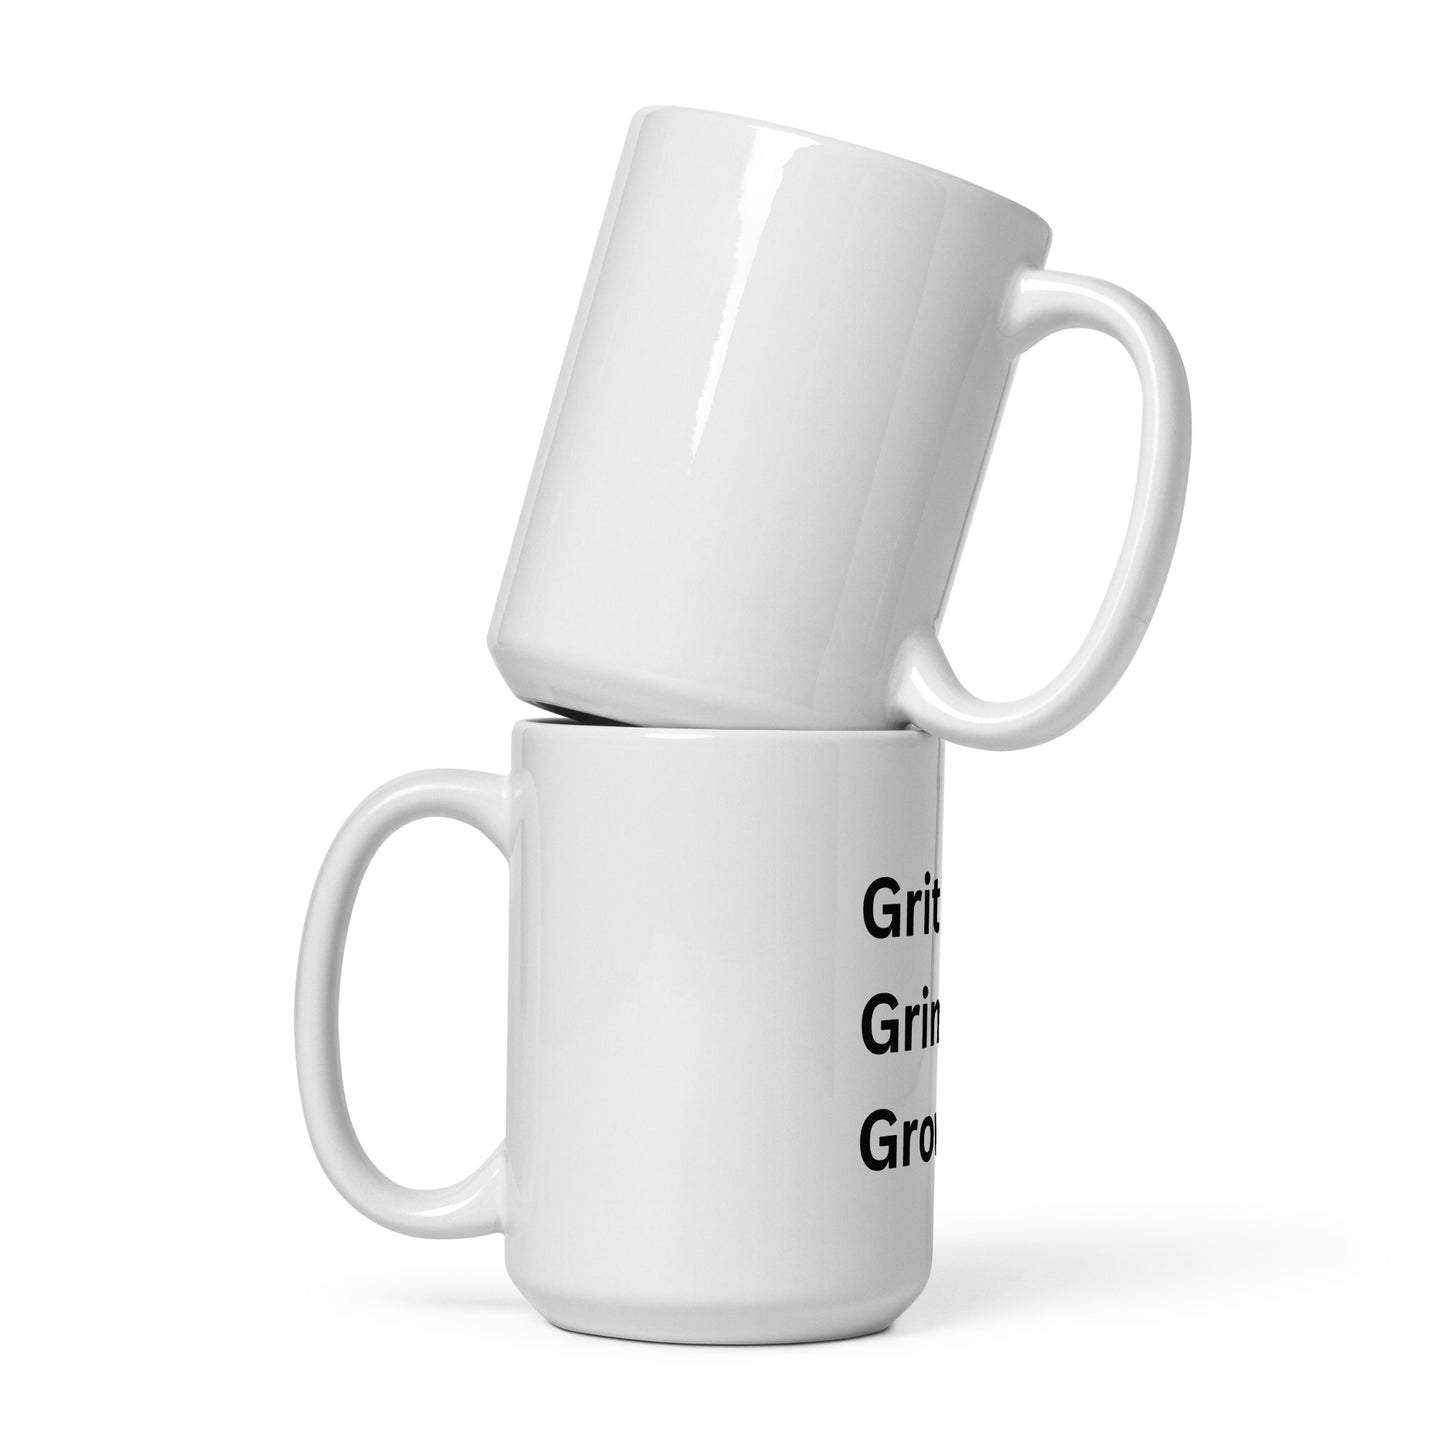 Grit. Grind. Growth. Entrepreneur Coffee Mug